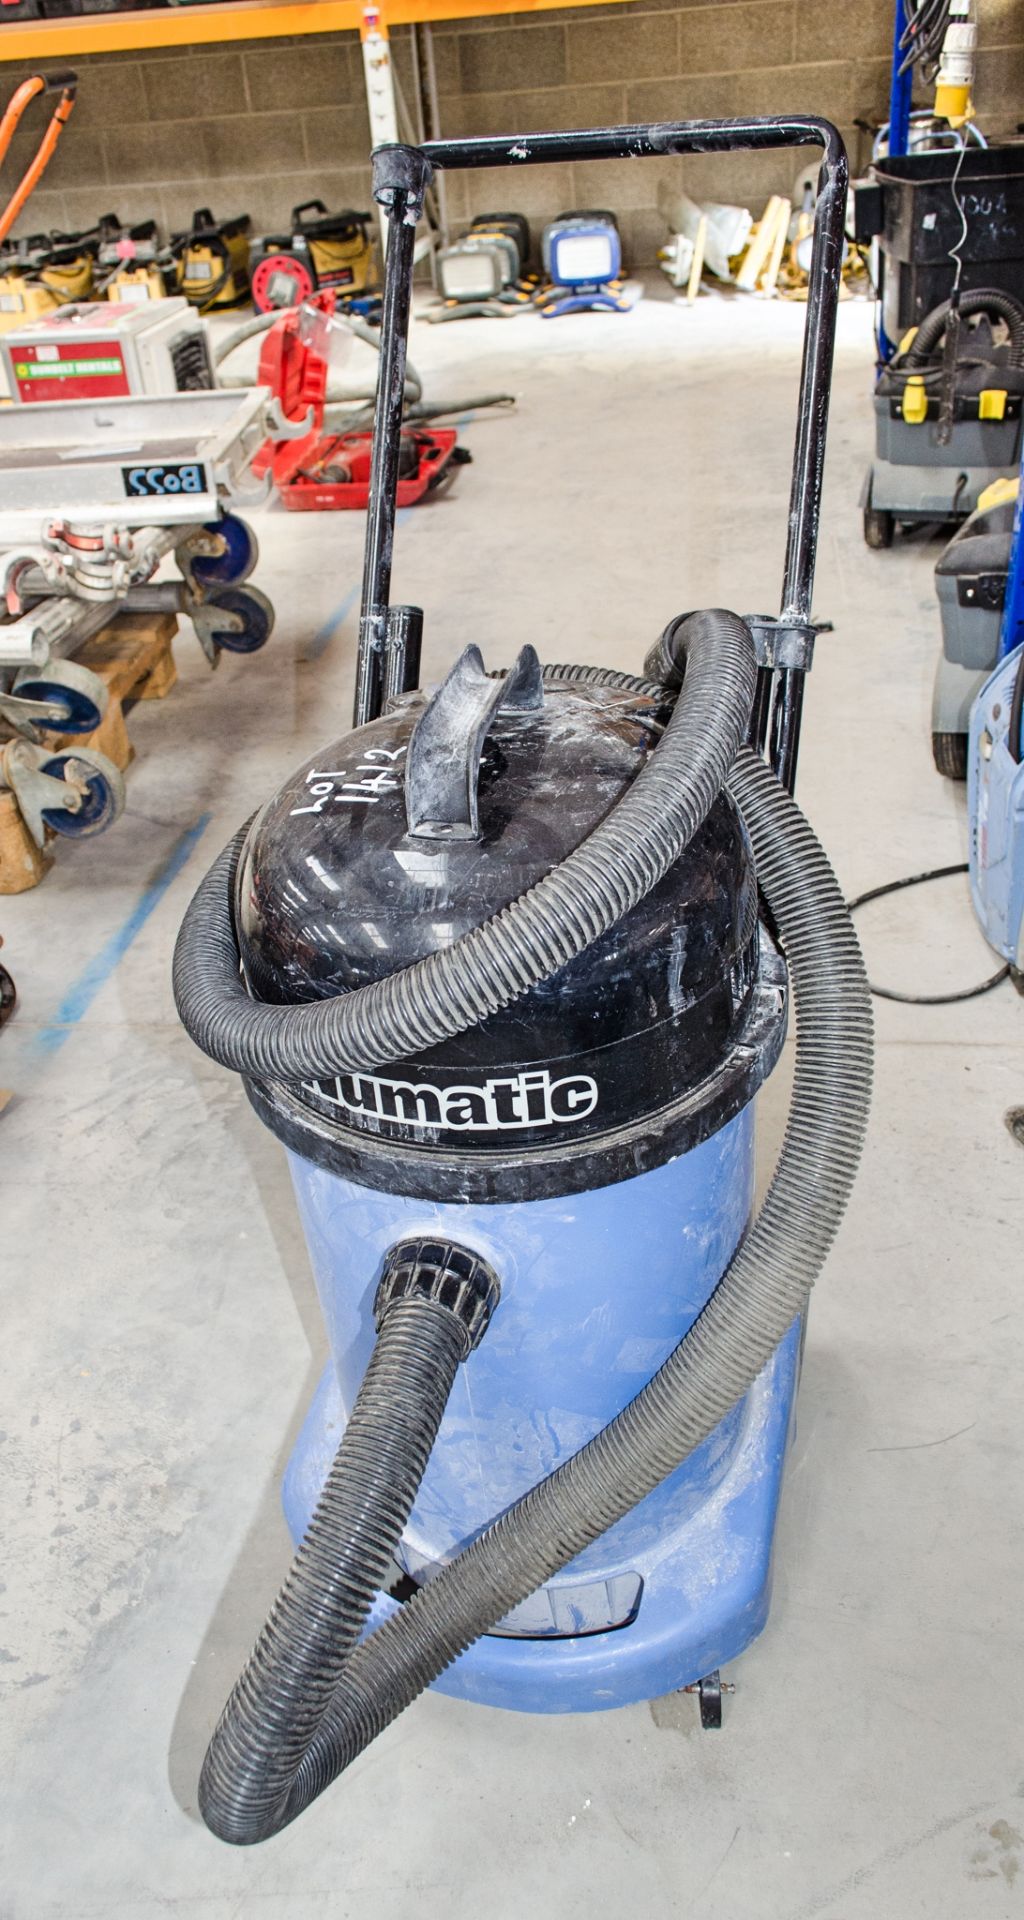 Numatic 110v vacuum cleaner c/w hose